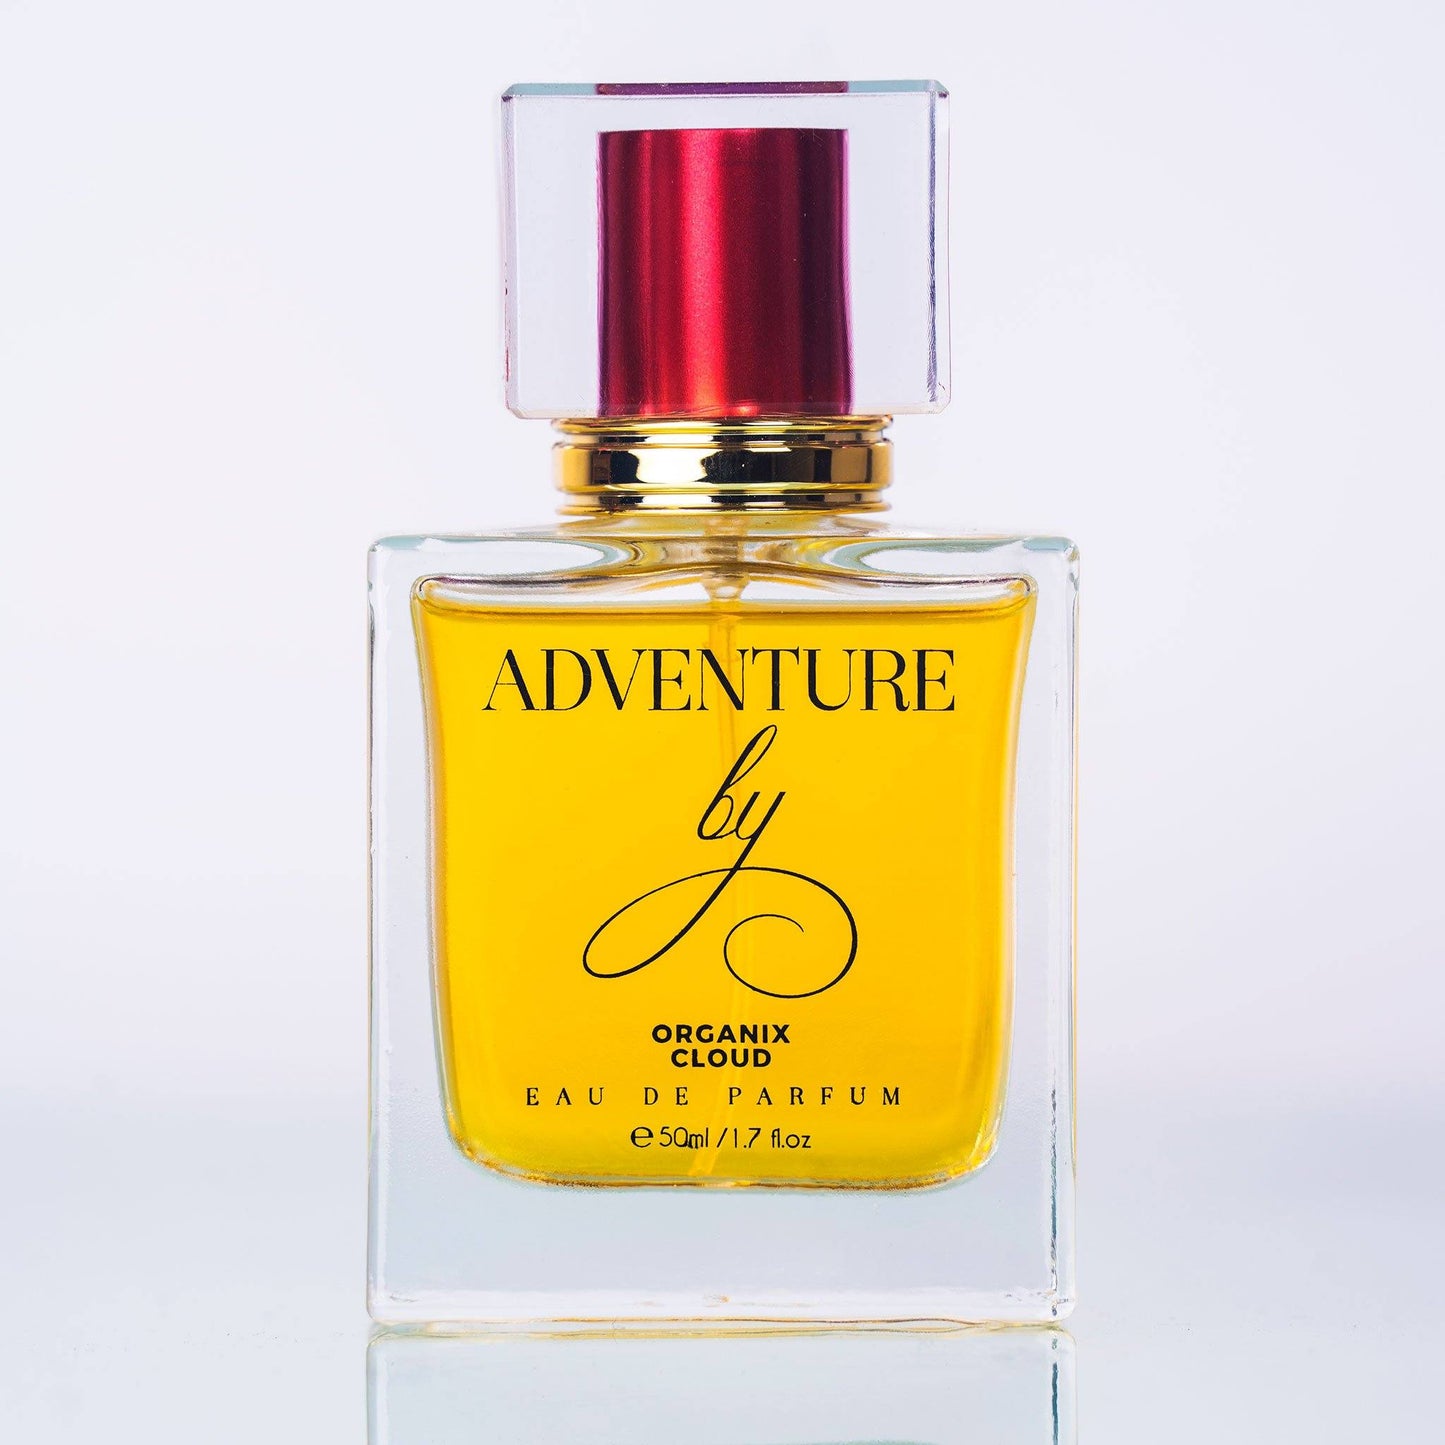 Adventure Men's Fragrances organixcloud 